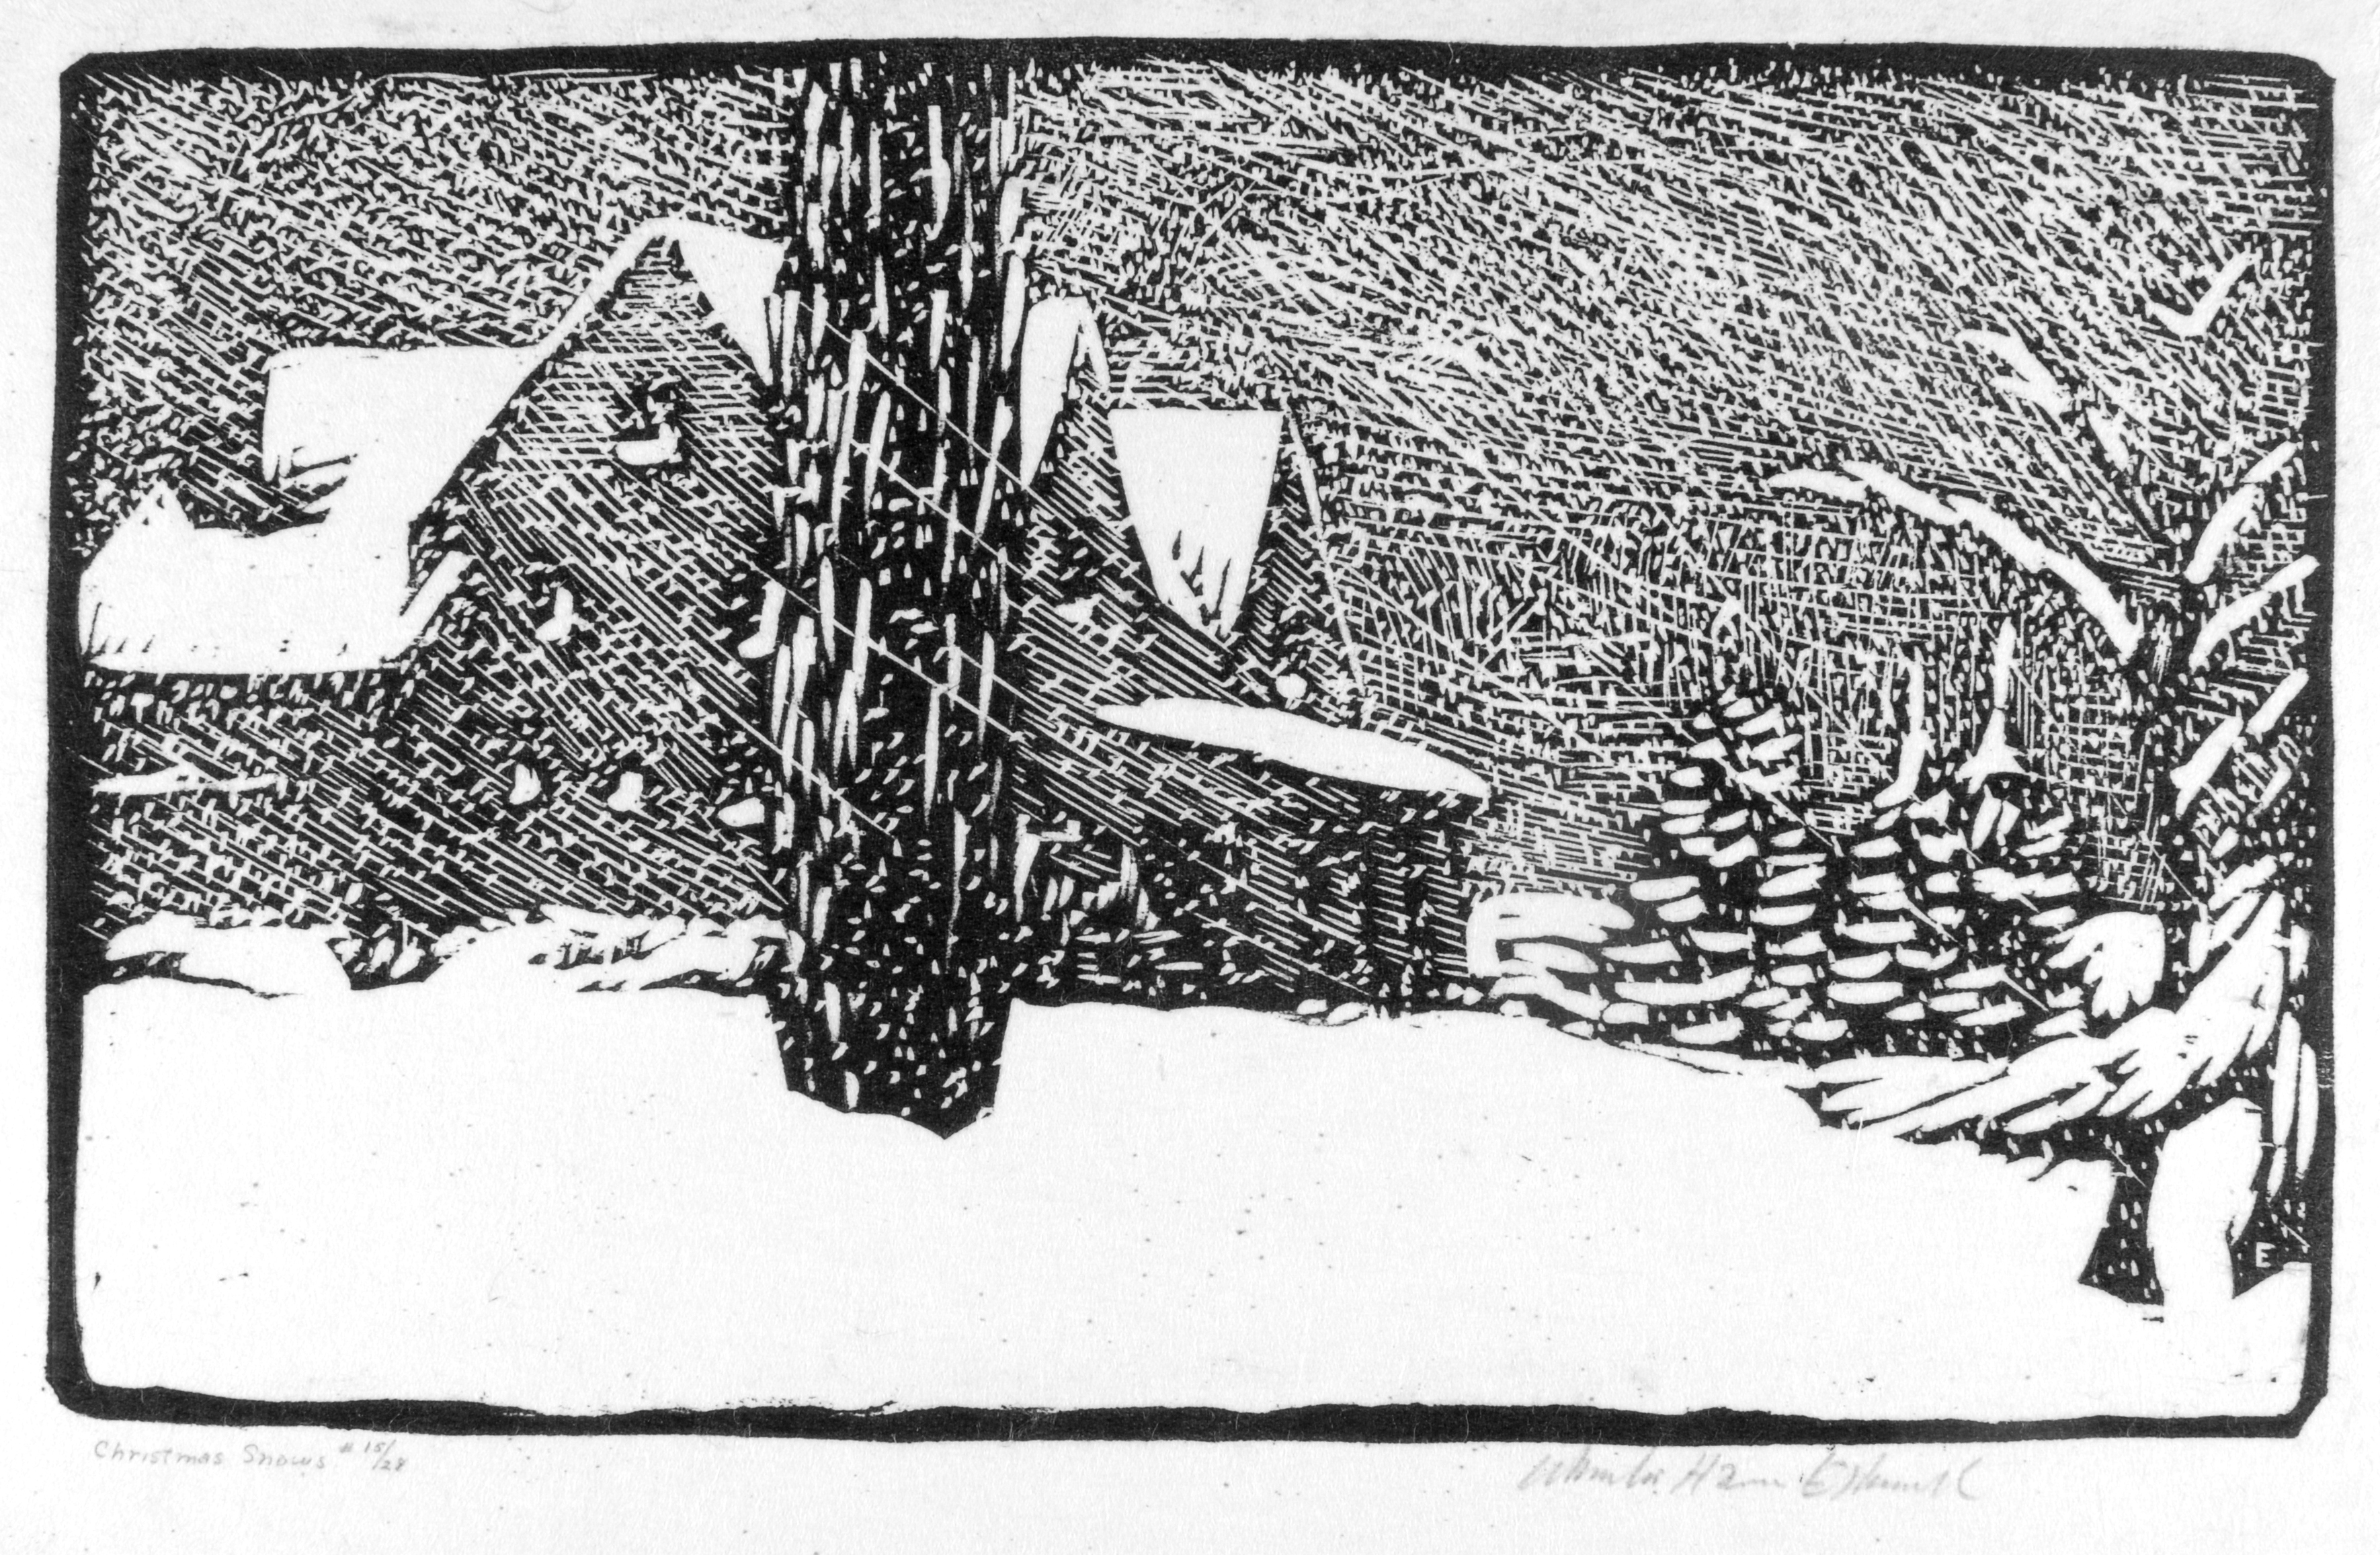 Christmas Snows, 1923, woodcut print by Wharton Esherick